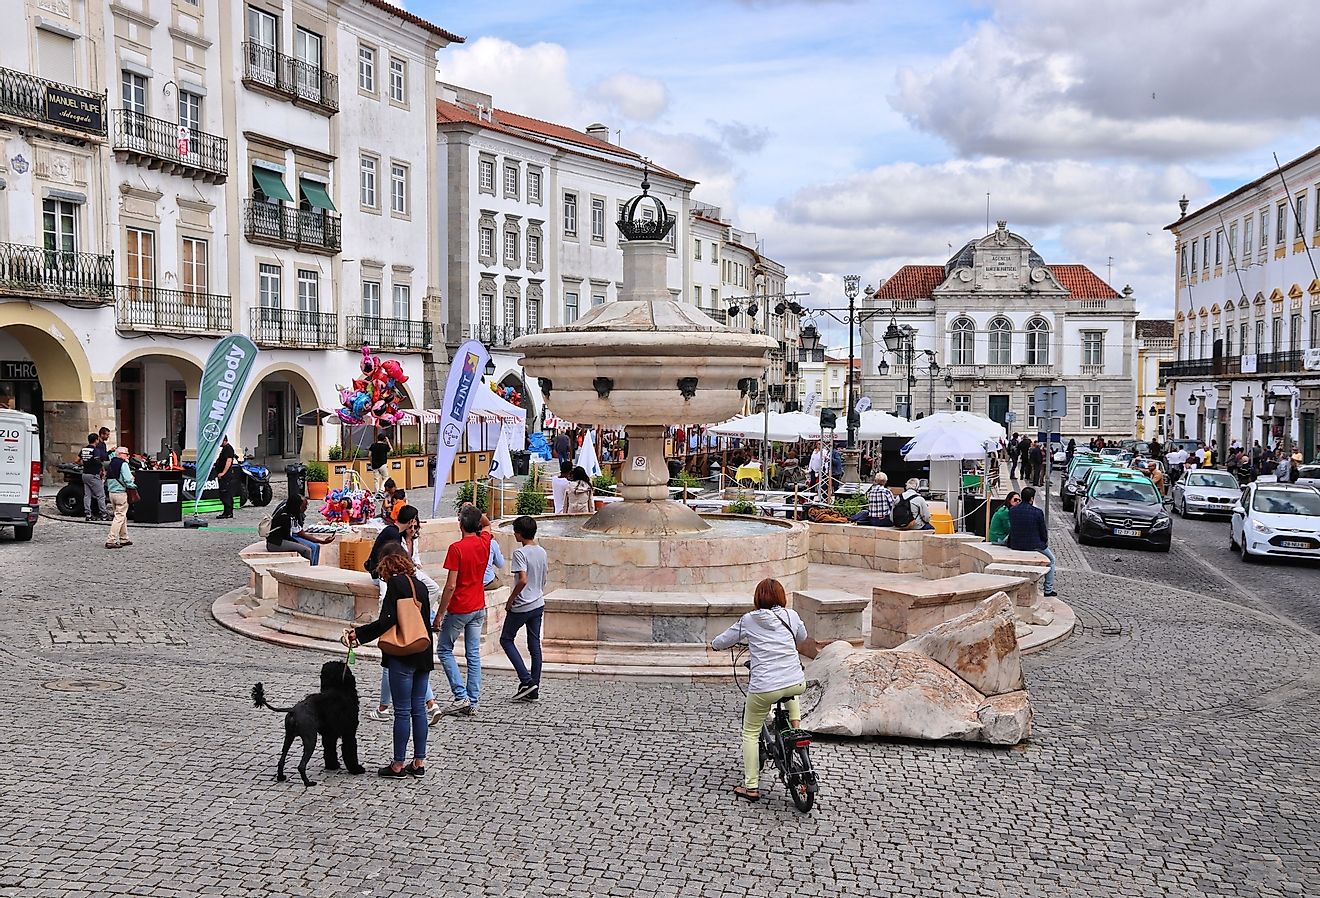 People visit Giraldo Square (Praca do Giraldo) in Evora, Portugal. Image credit Tupungato via Shutterstock